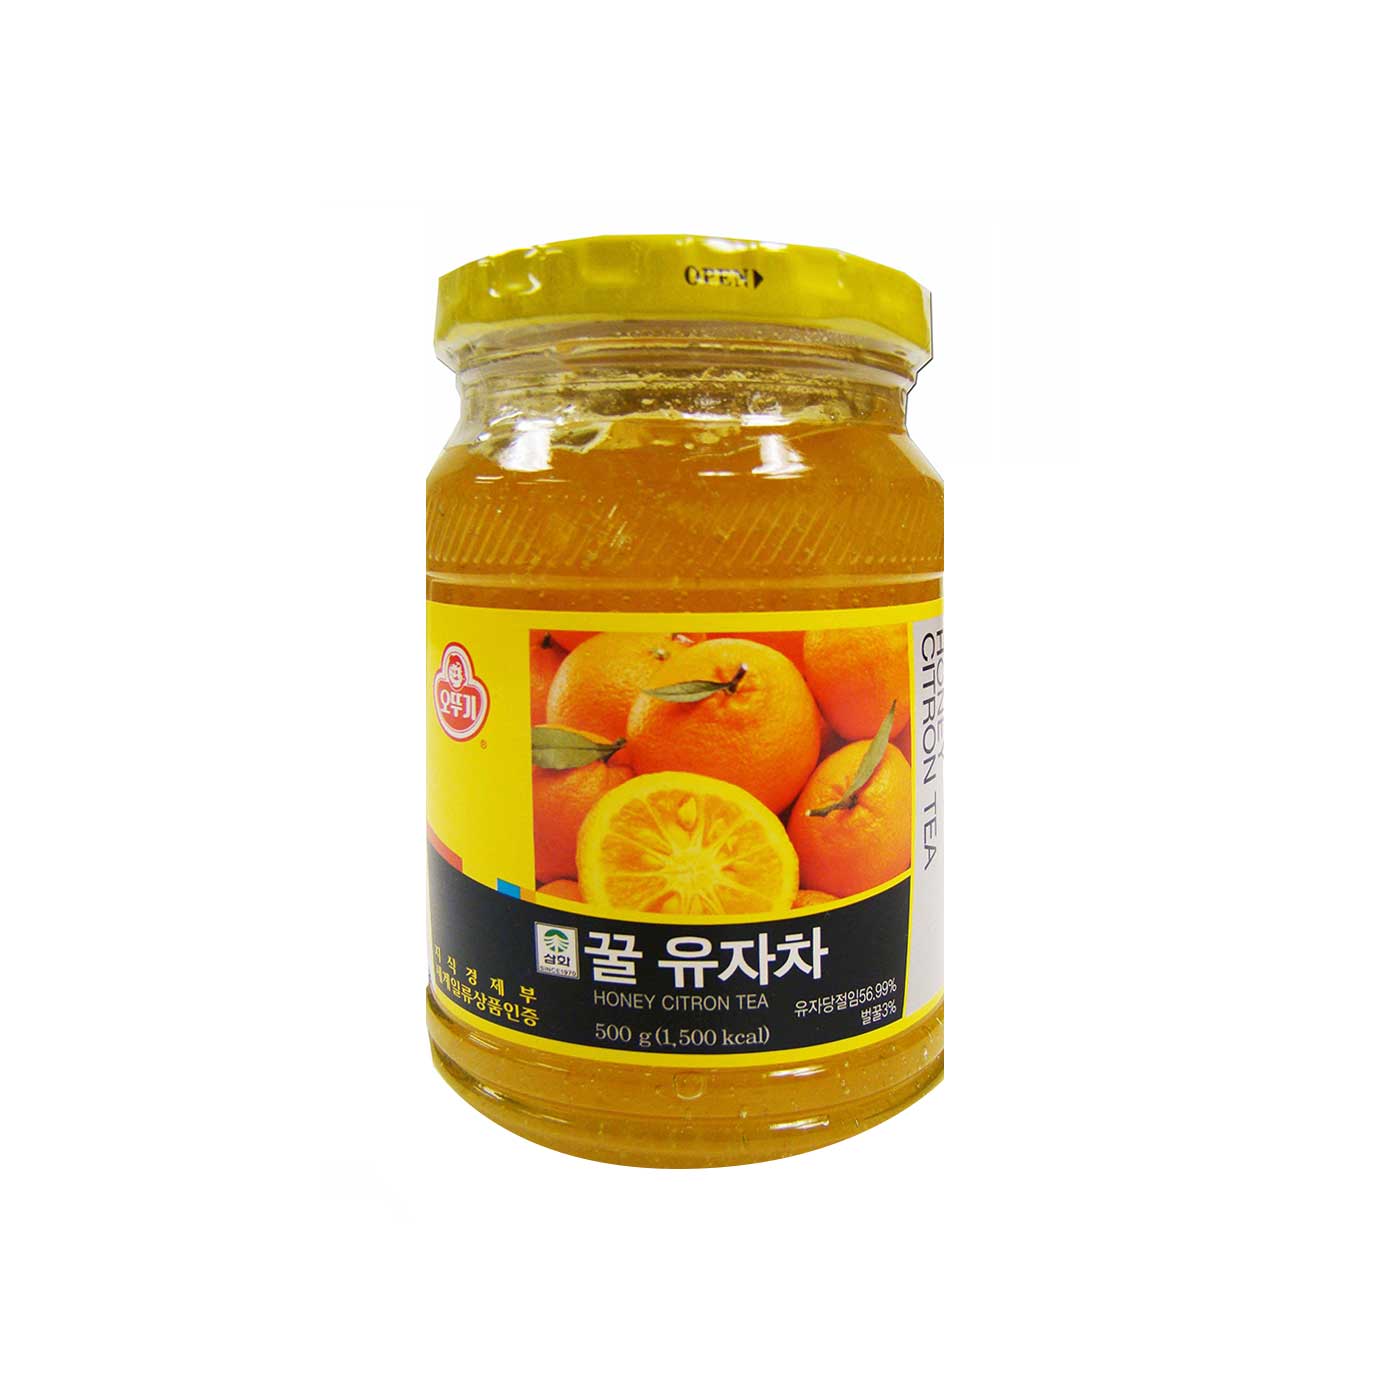 Honey Citron Liquid Tea 20/500g 삼화 꿀유자차